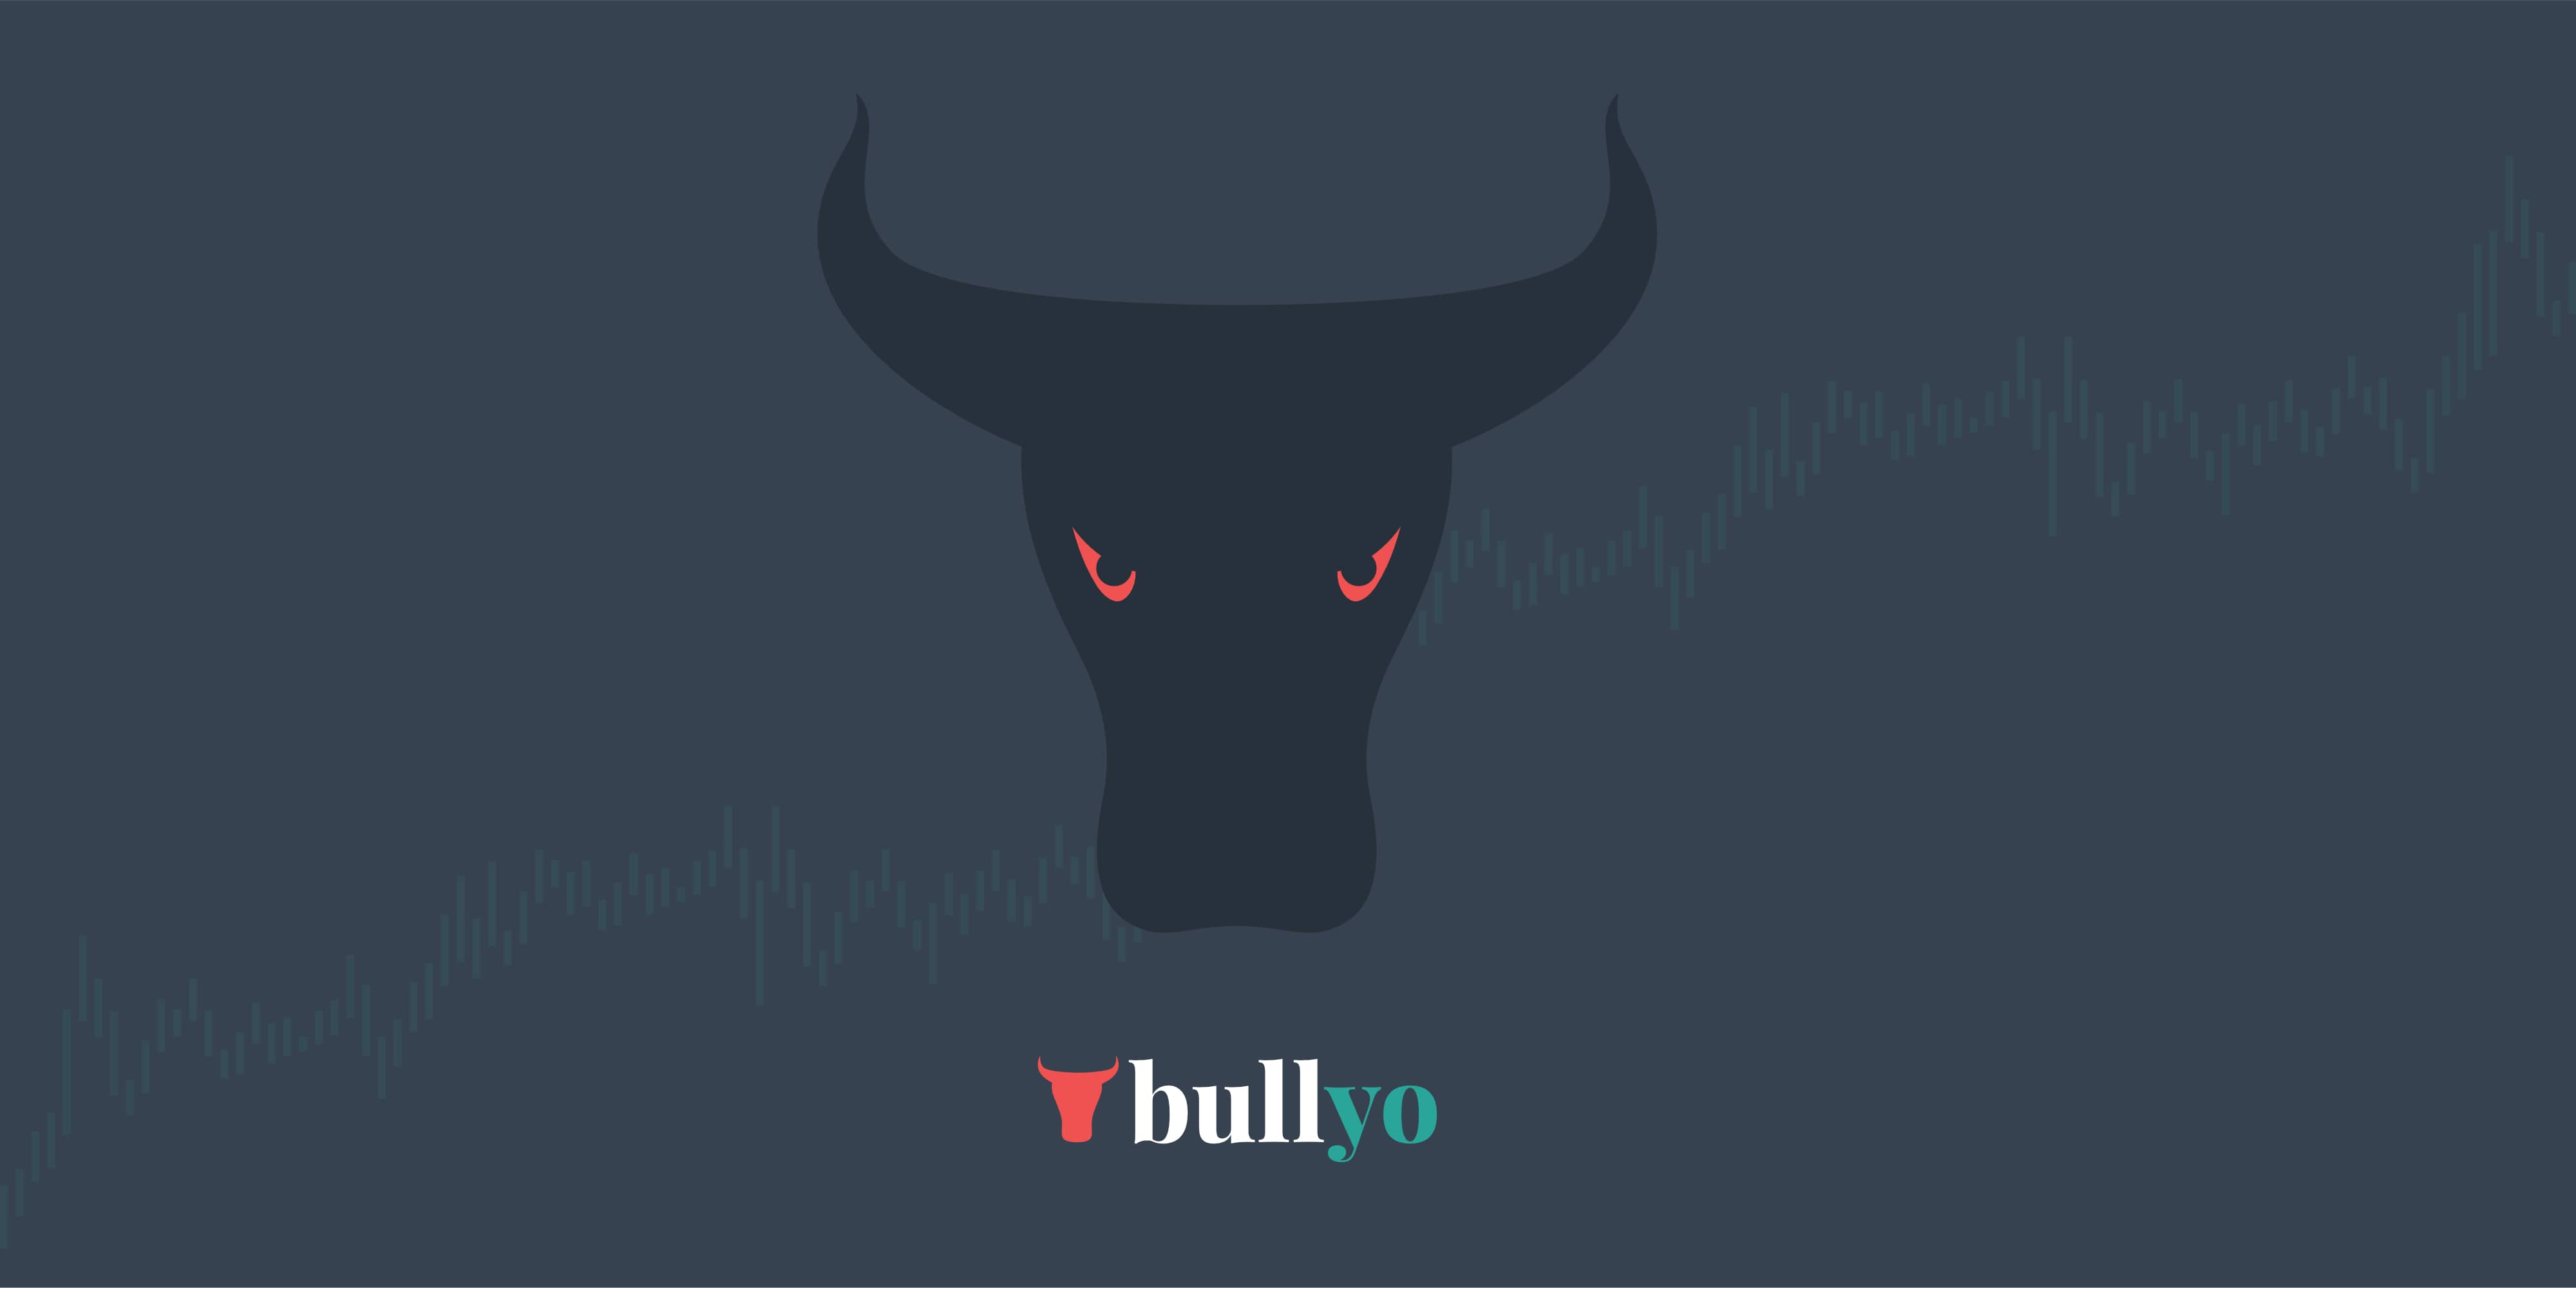 Bullyo Bull logo design